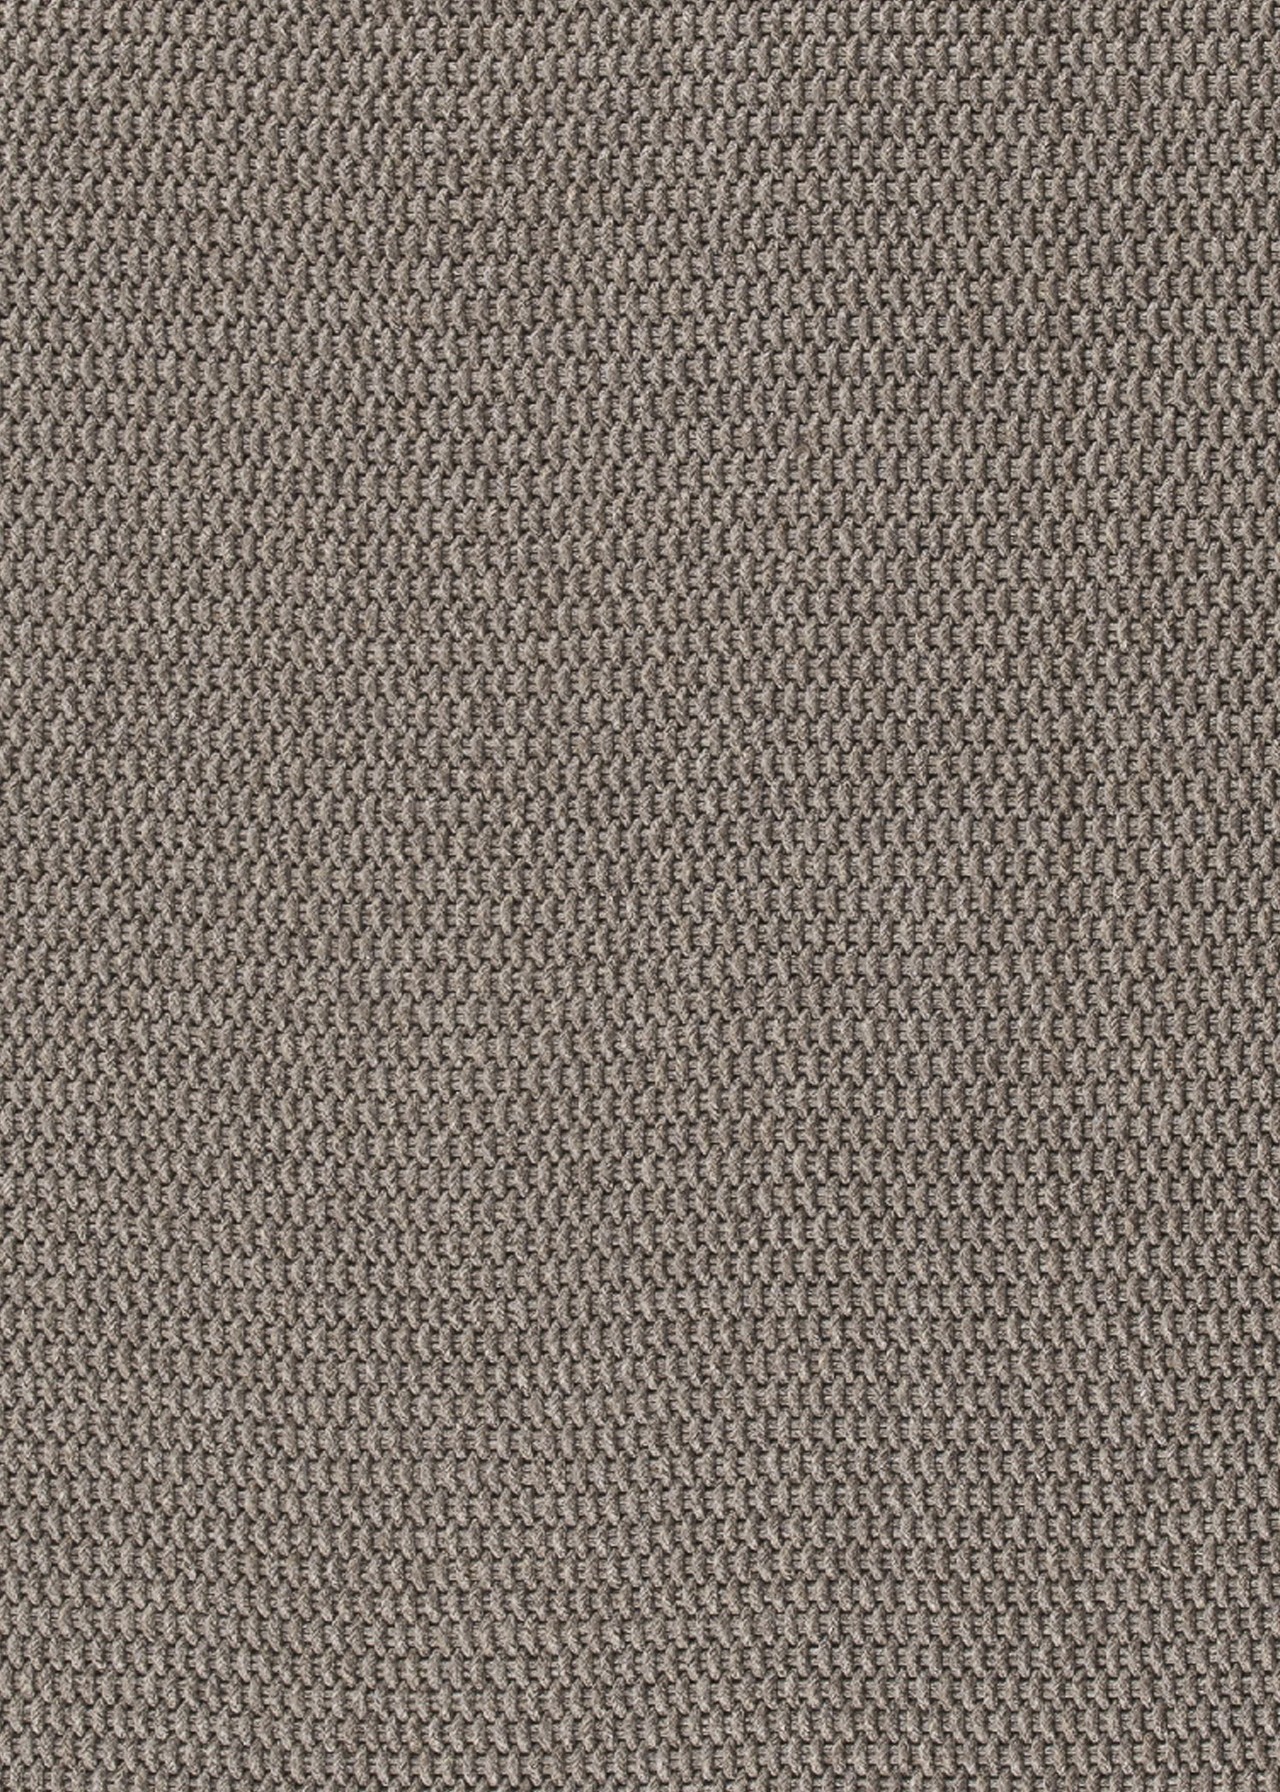 Litoral Ubatuba Grey